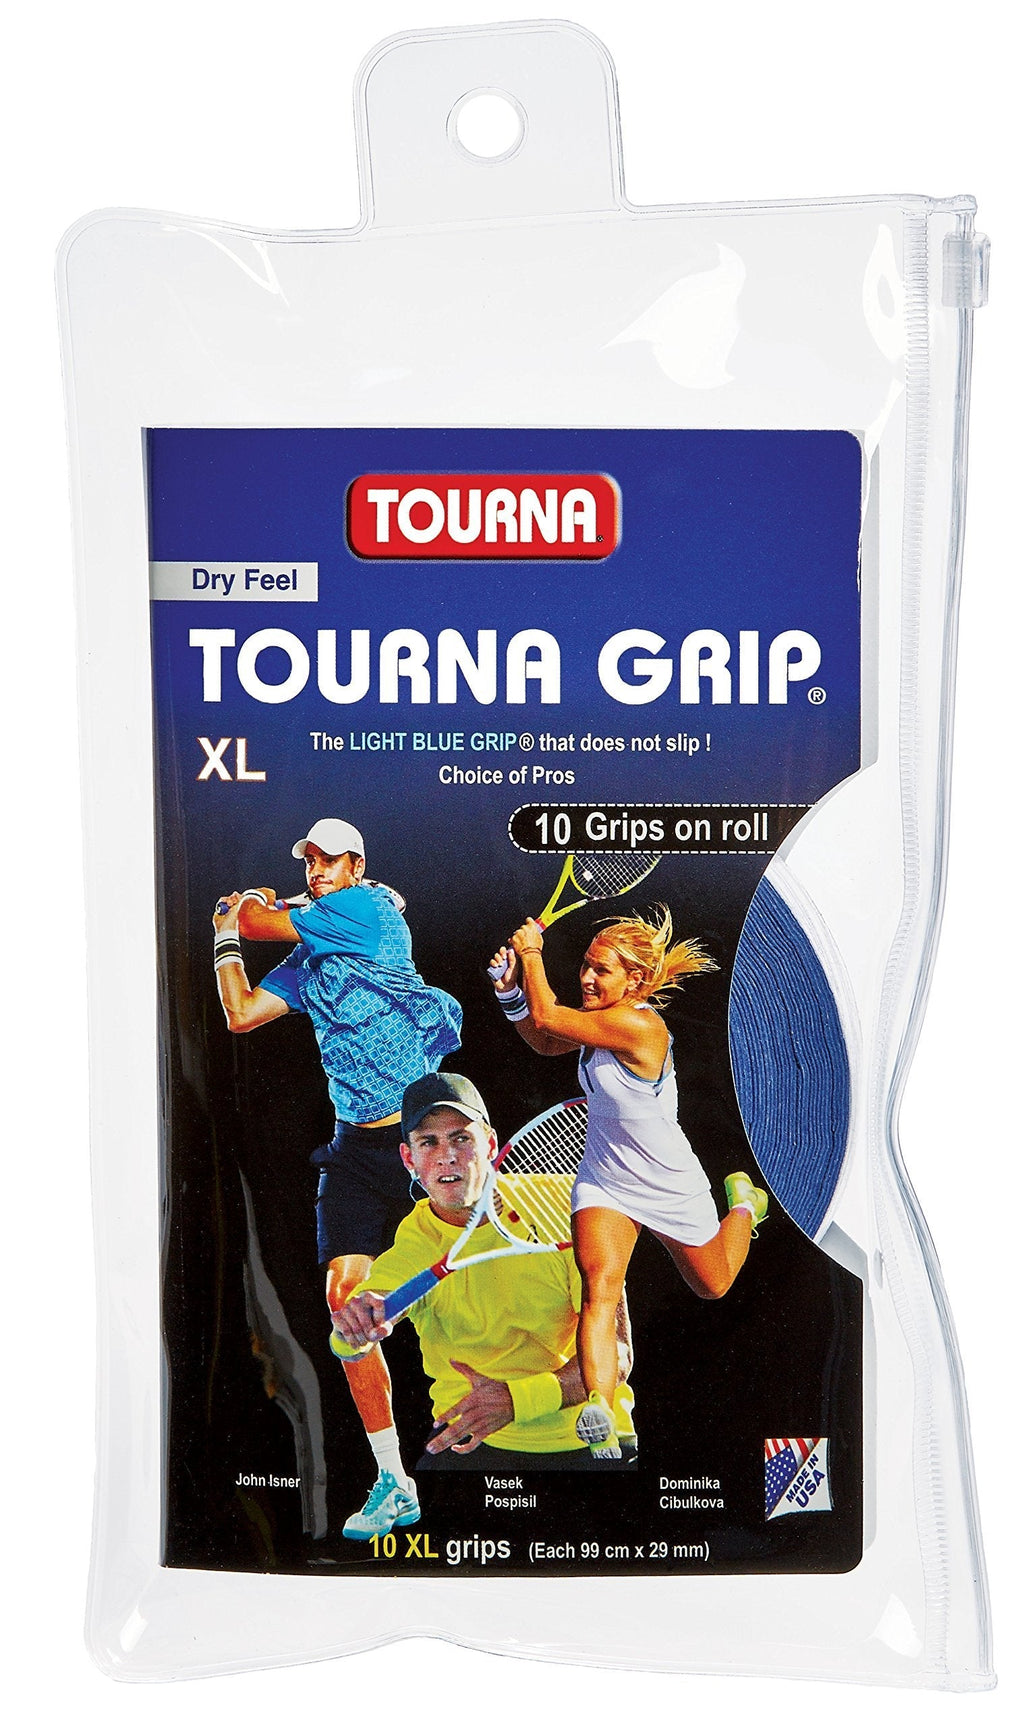 Tourna Grip XL Original Dry Feel Tennis Grip Pack of 10 Grips - BeesActive Australia